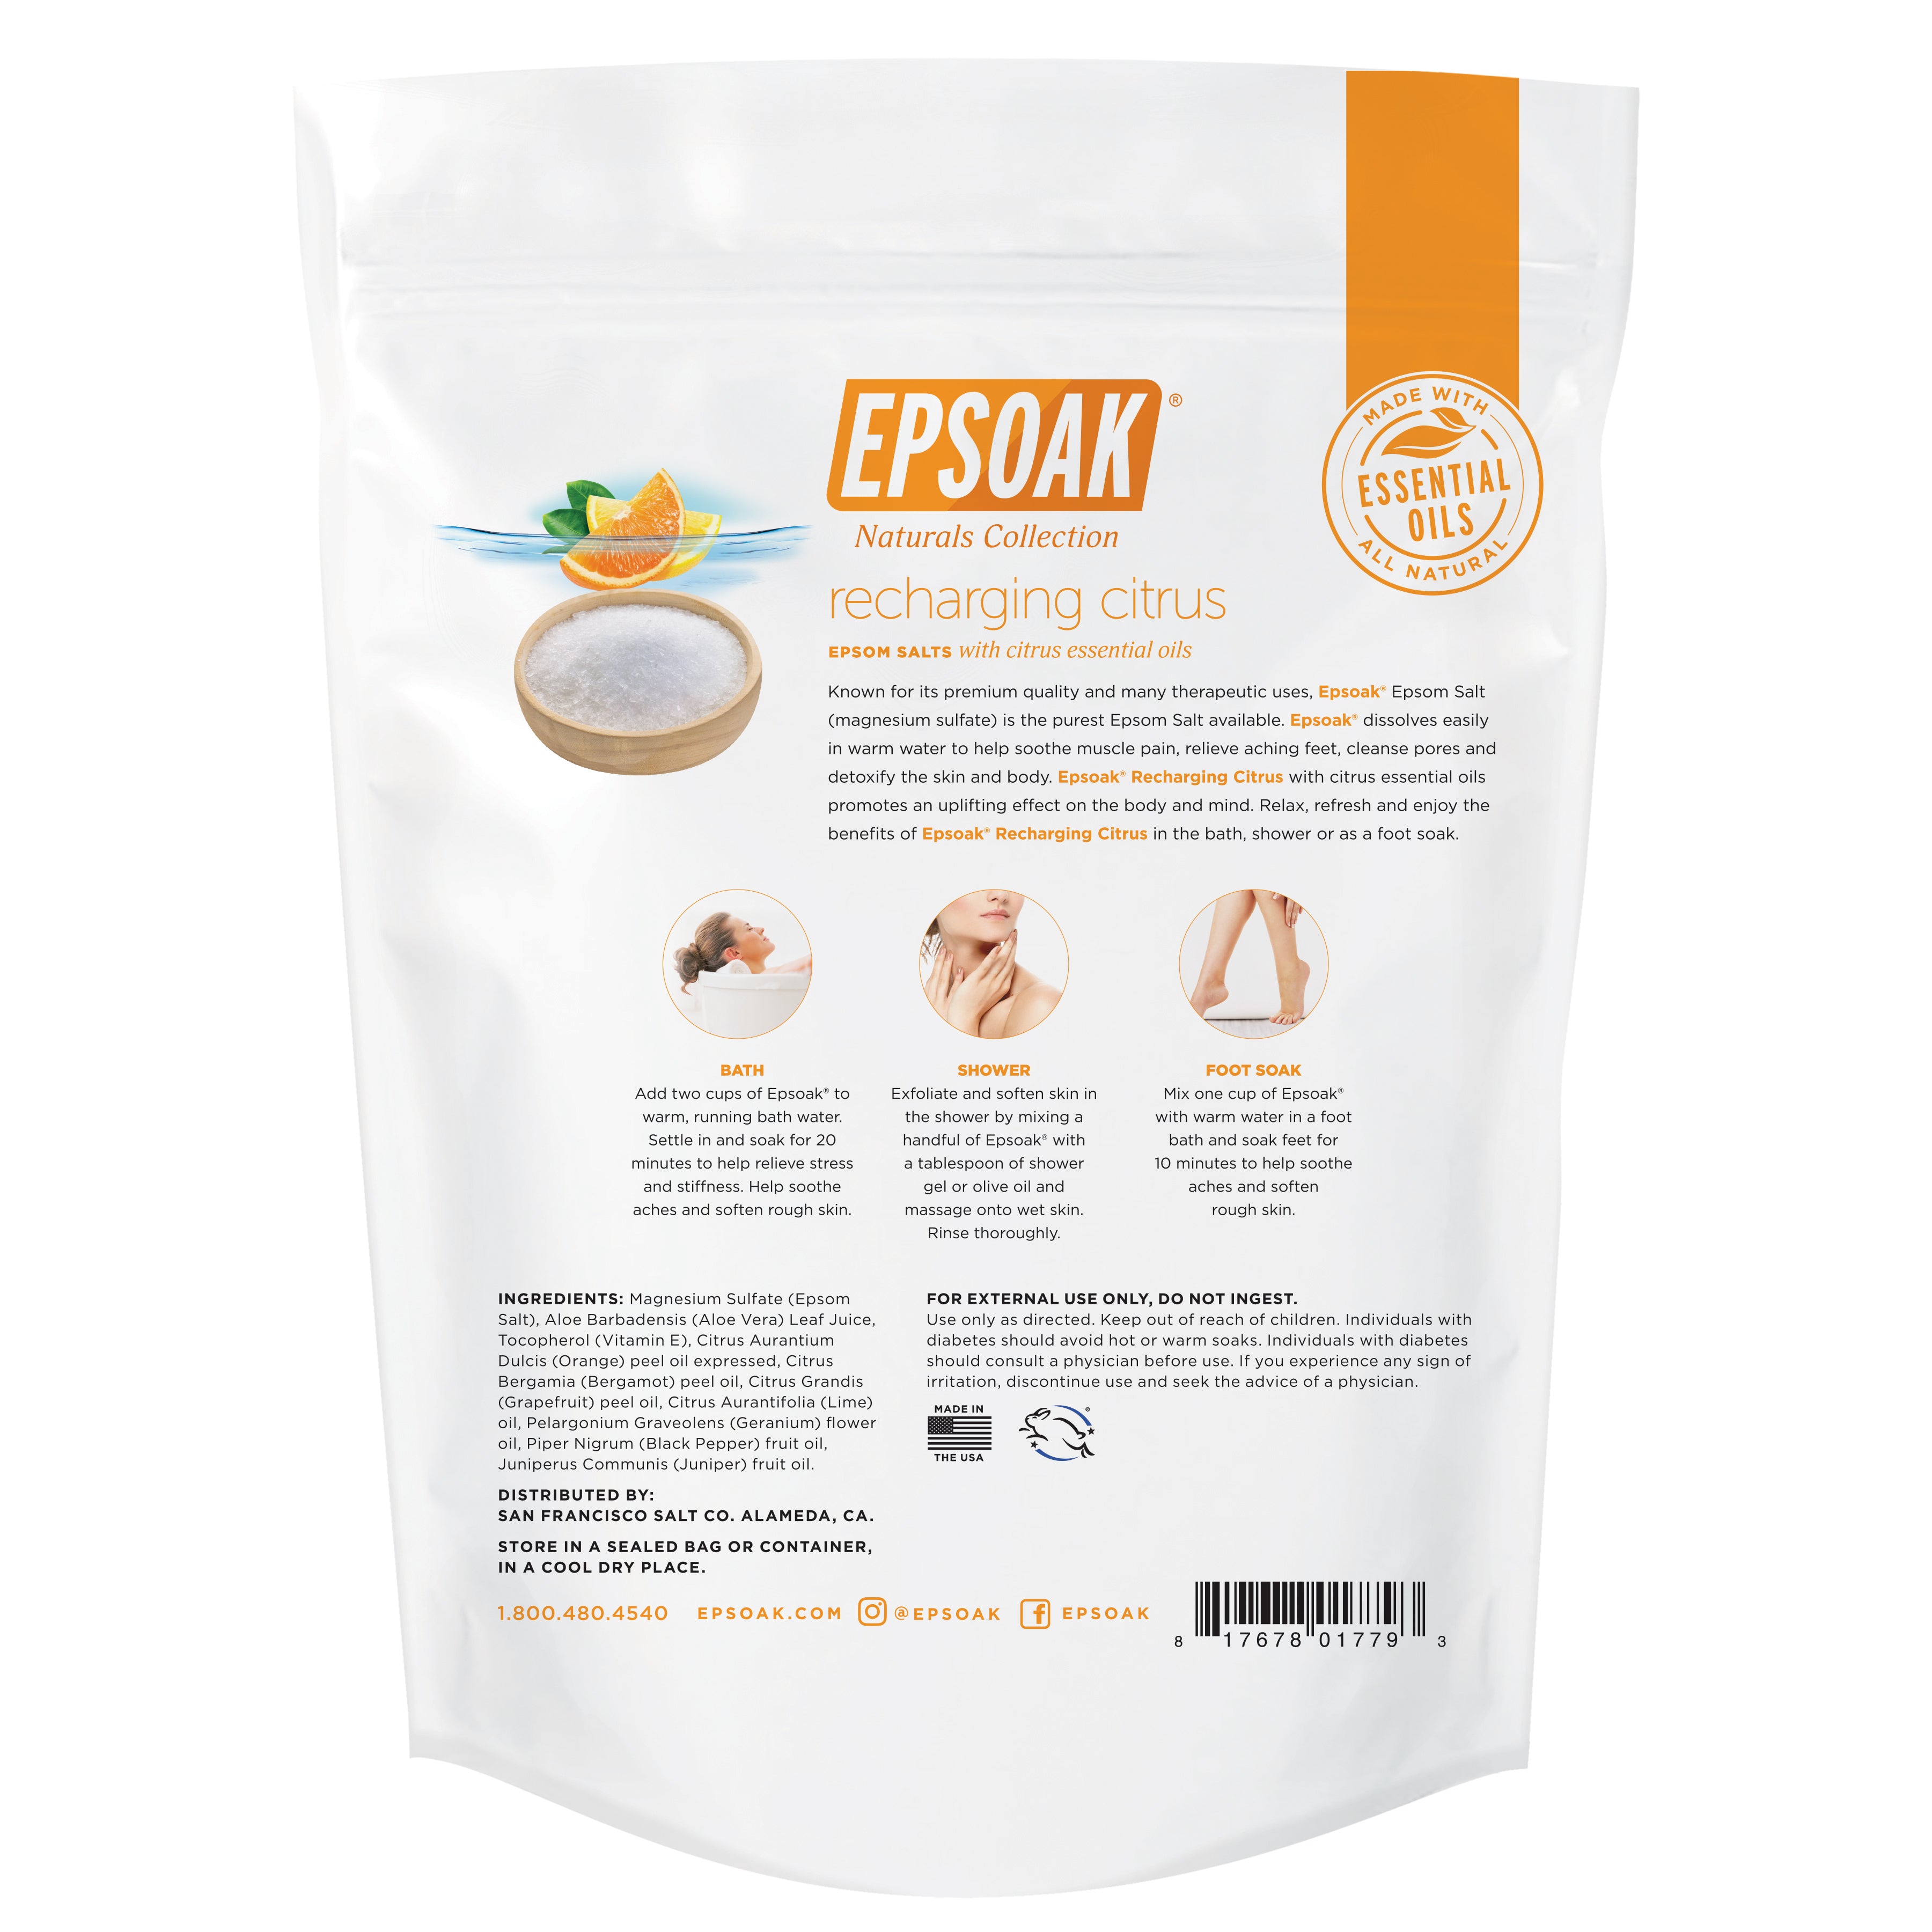 Recharging Citrus Epsom Salt Bath Salt 2 lb - Epsoak Naturals Collection by San Francisco Salt Company